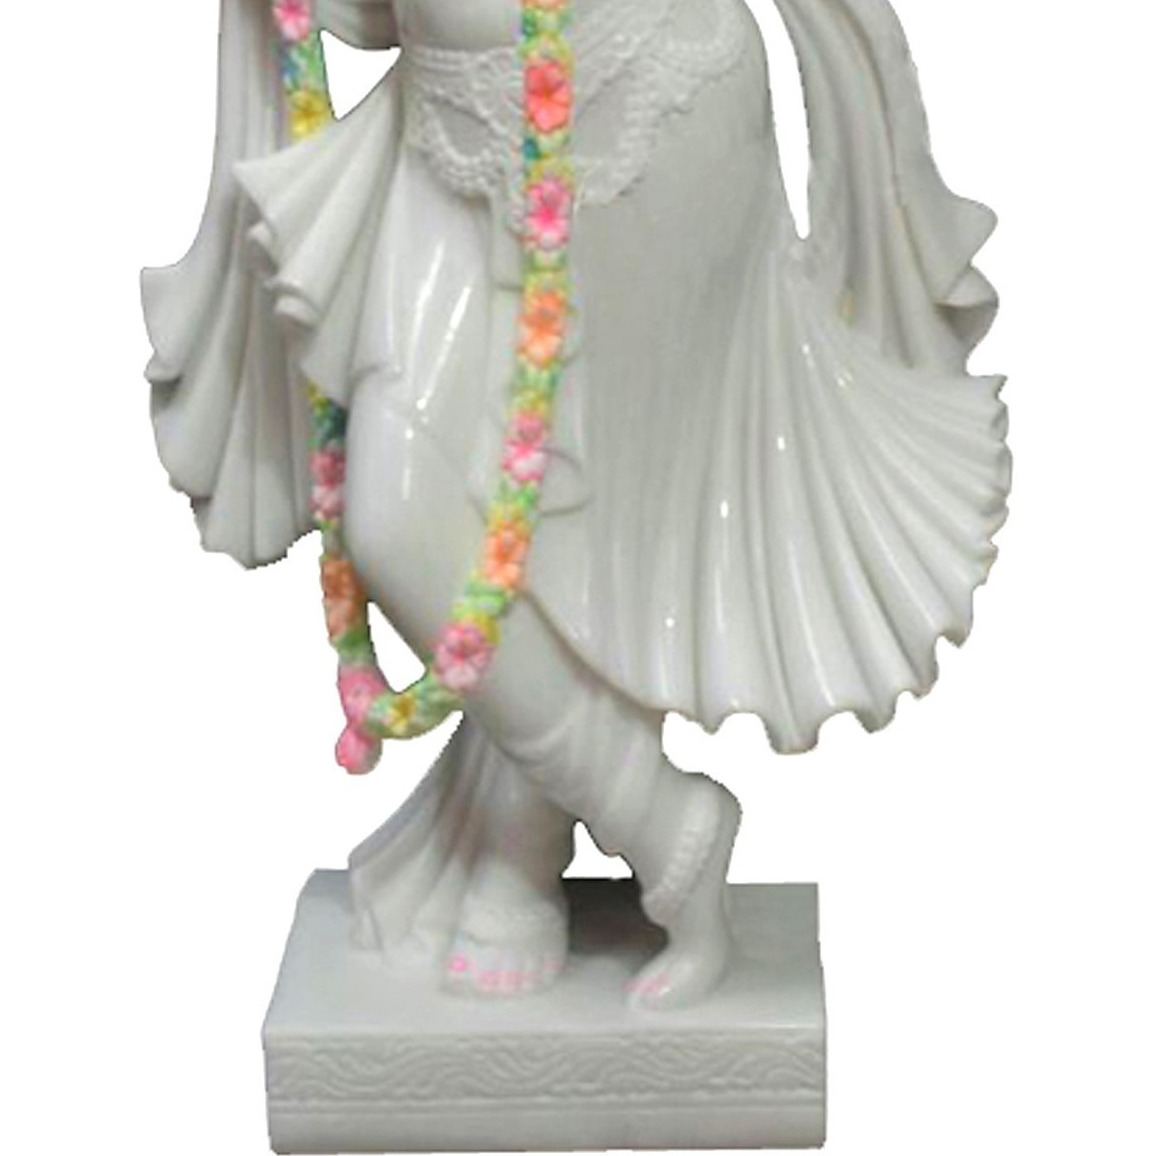 Marble Krishna Statue, Krishna Playing Flute, White Marble Krishna Idol Statue Beautiful Hand Carved Mandir, Pooja Room Home Decor Statue